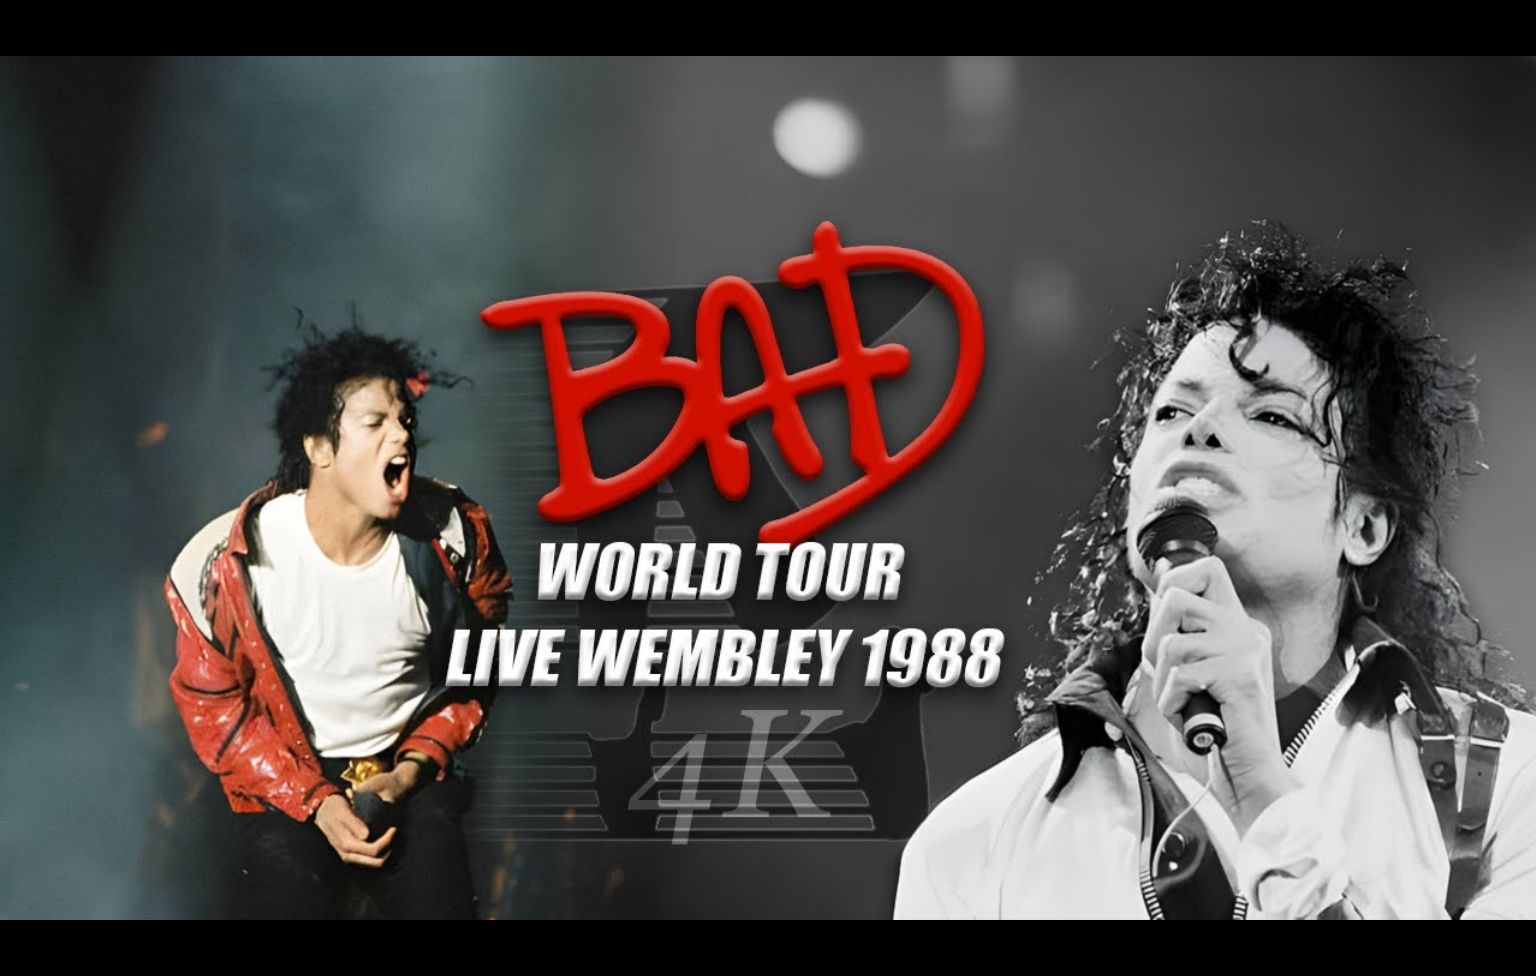 【4K60帧】迈克尔·杰克逊 1988年伦敦温布利大球场《BAD》世界巡回演唱会 超分补帧画质增强版 | 修复制作：FMJLEGACY